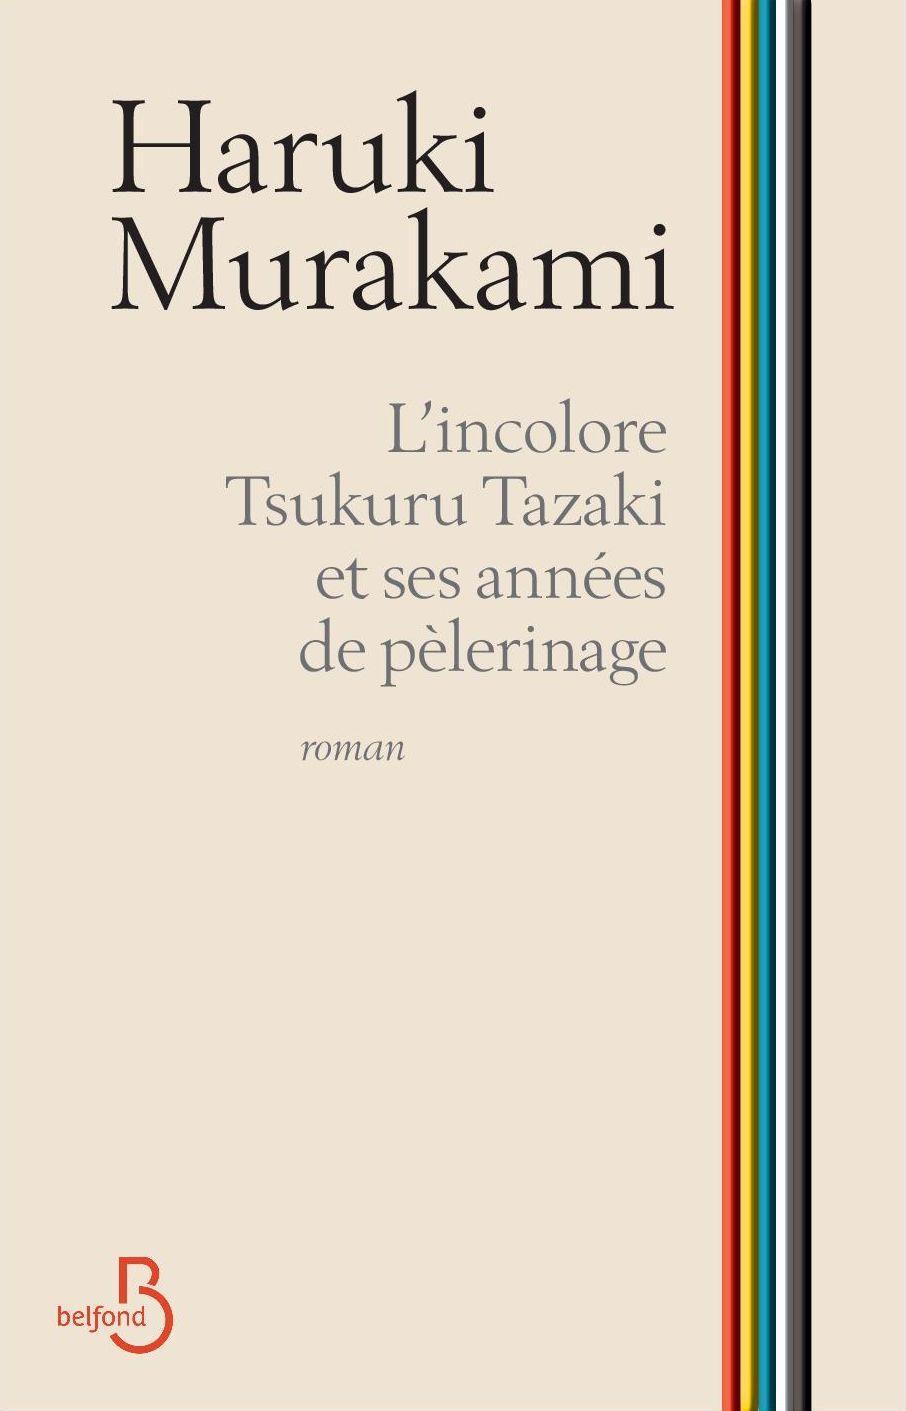 Haruki Murakami: L'incolore Tsukuru Tazaki et ses années de pèlerinage (French language, 2014)